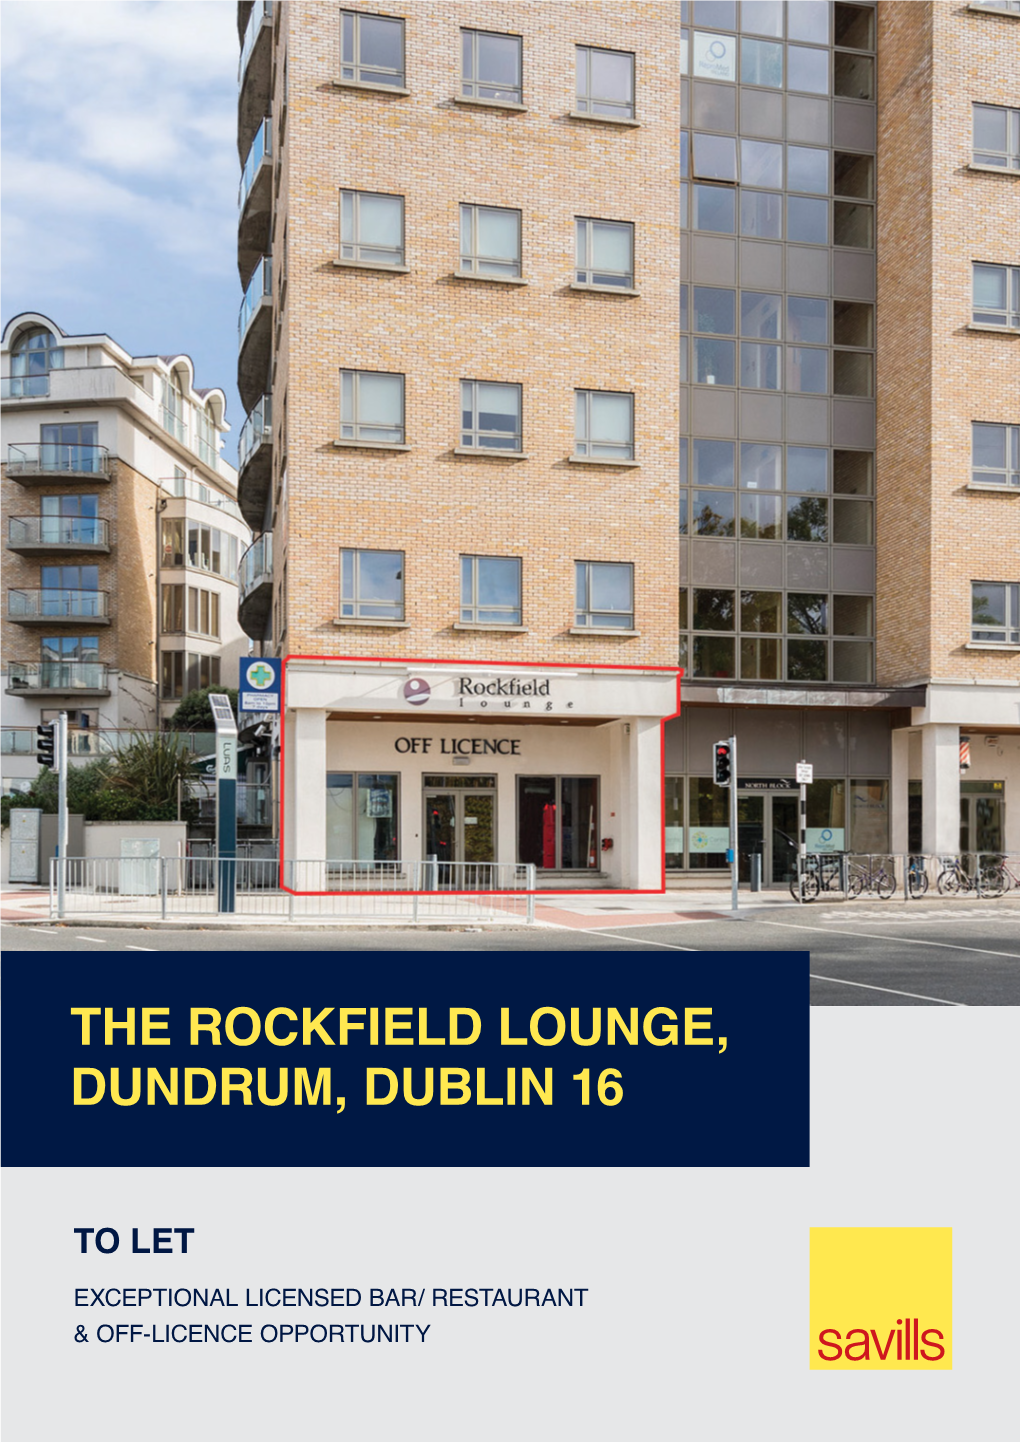 The Rockfield Lounge, Dundrum, Dublin 16